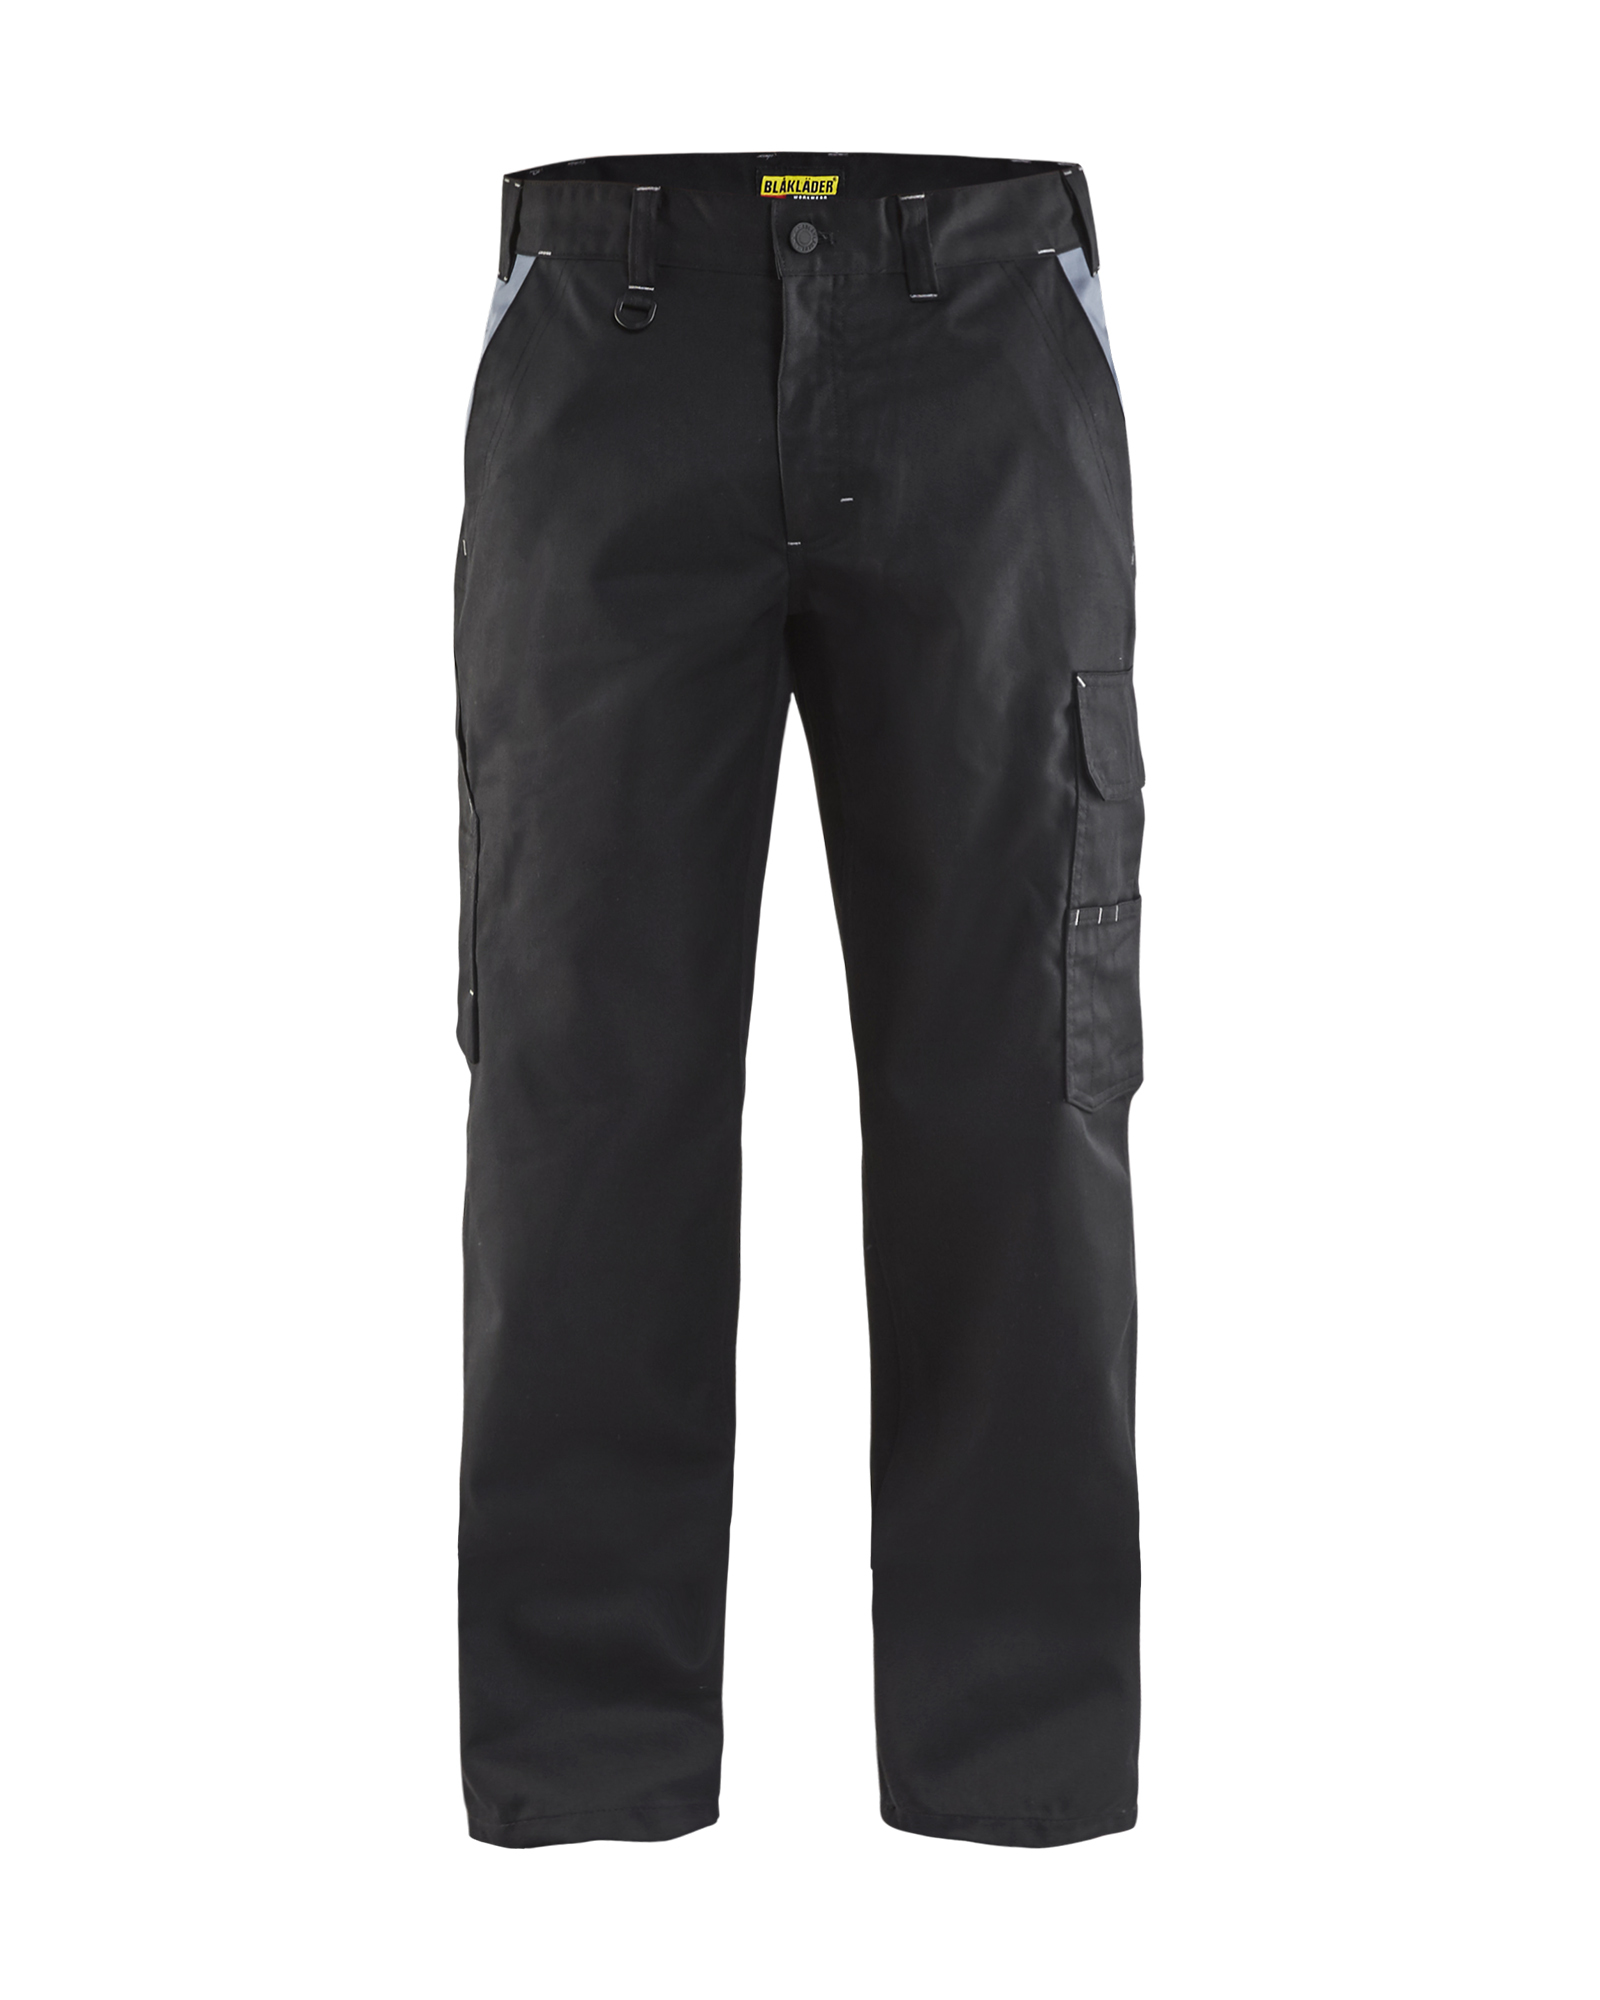 Pantalon Industrie Blåkläder 1404 Noir/Gris clair Blaklader - 140412109994C